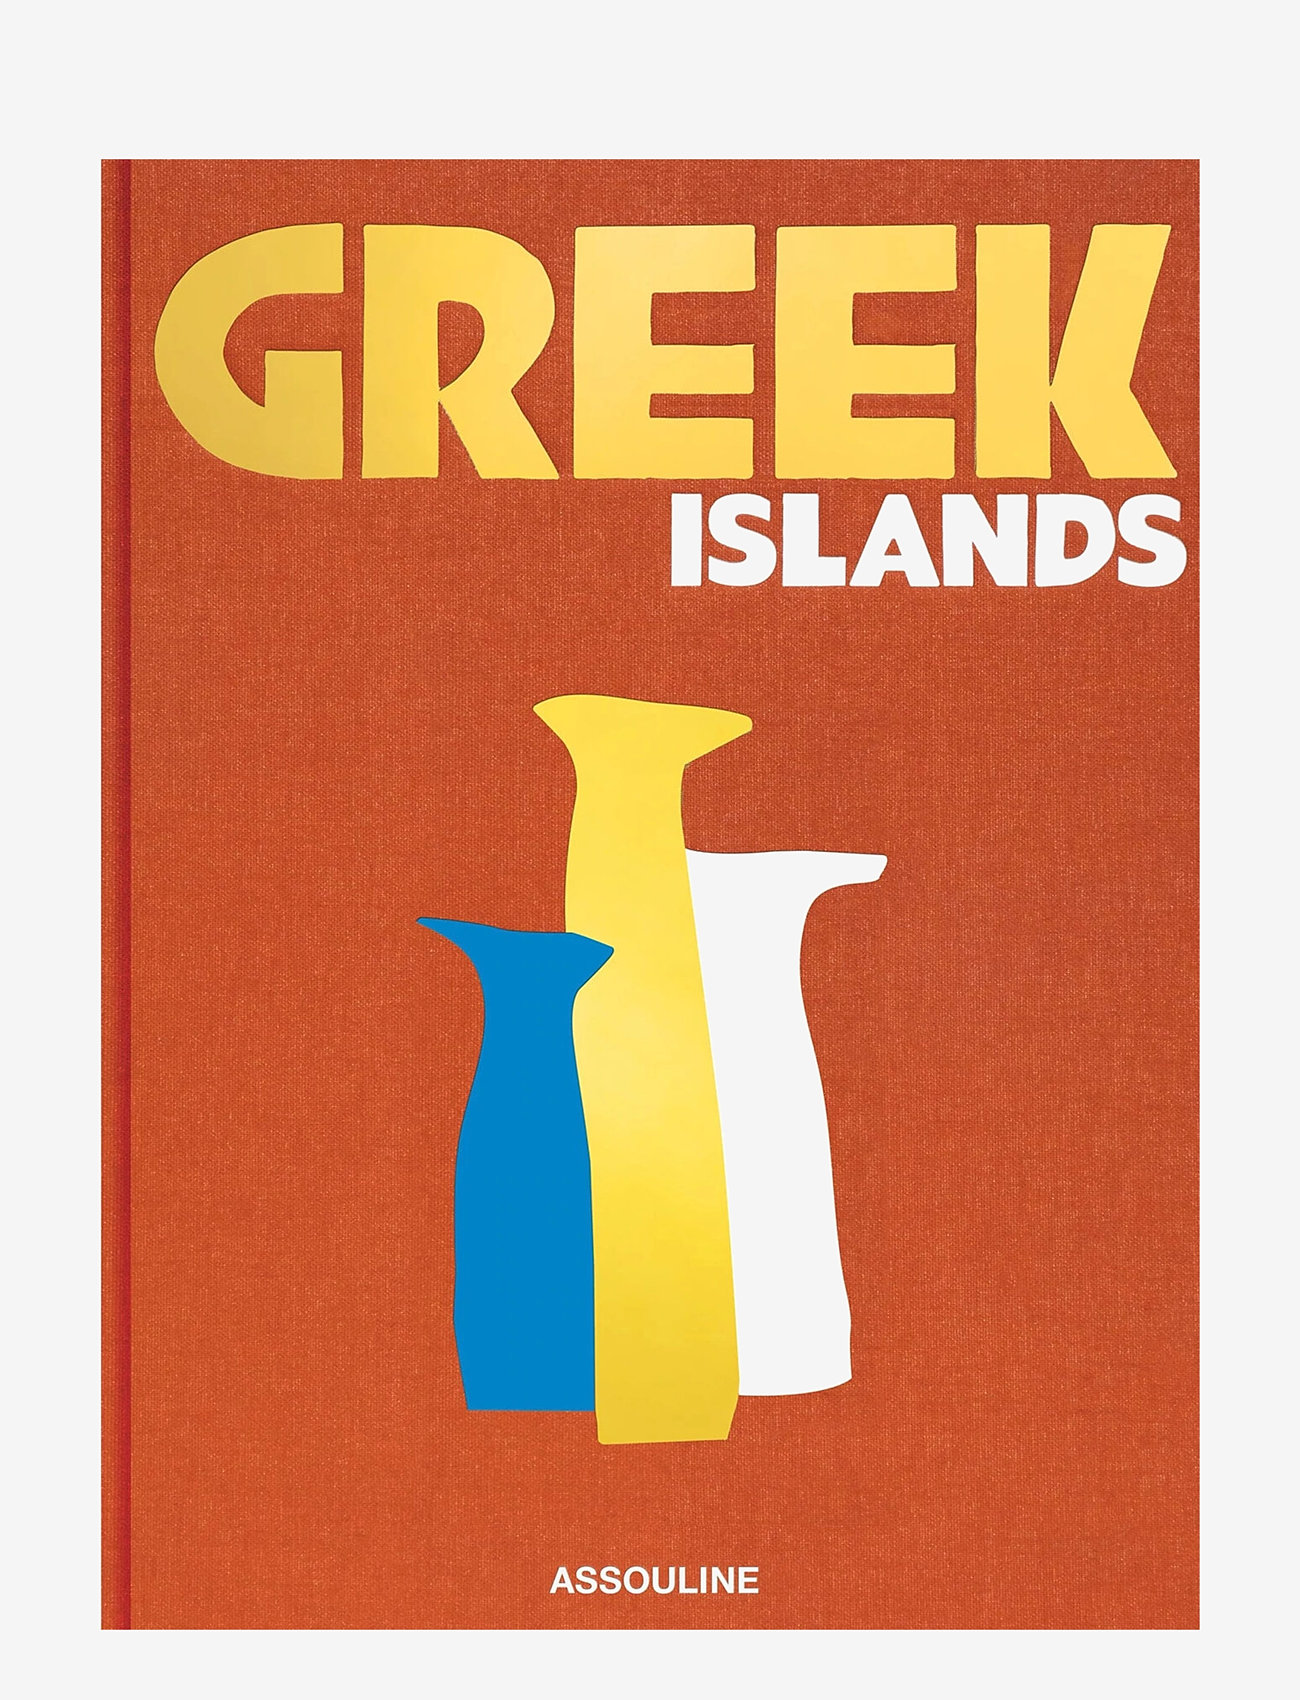 New Mags - Greek Islands - geburtstagsgeschenke - orange - 0